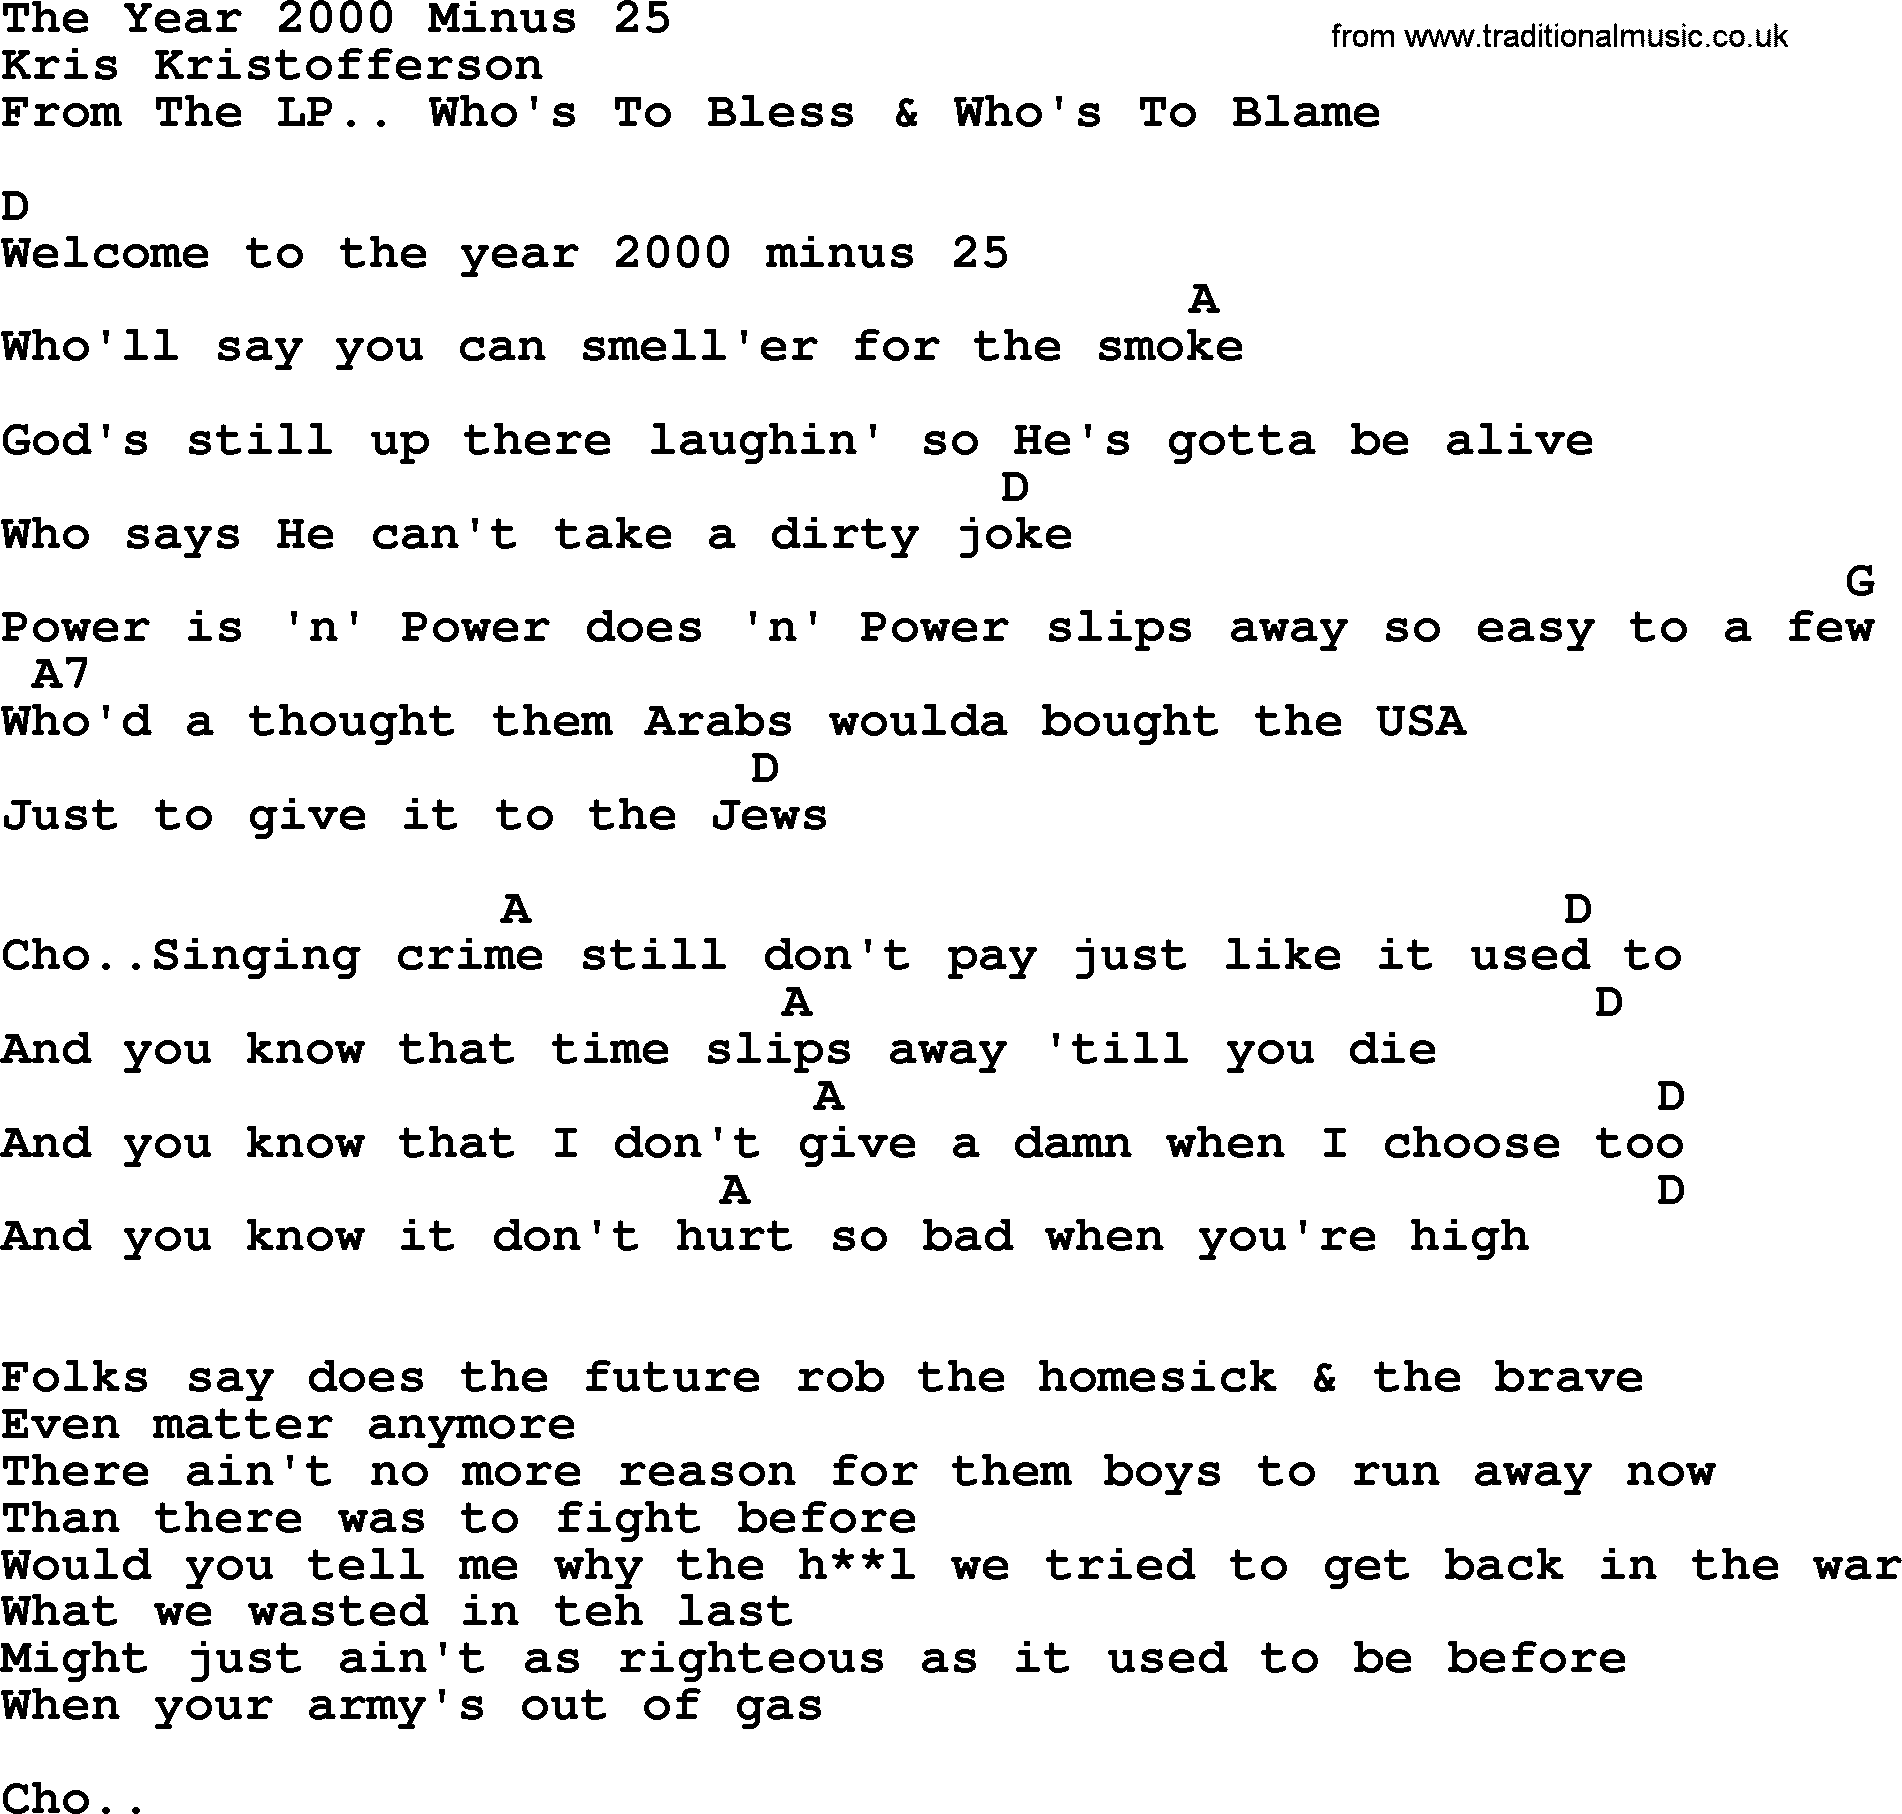 Kris Kristofferson song: The Year 2000 Minus 25 lyrics and chords